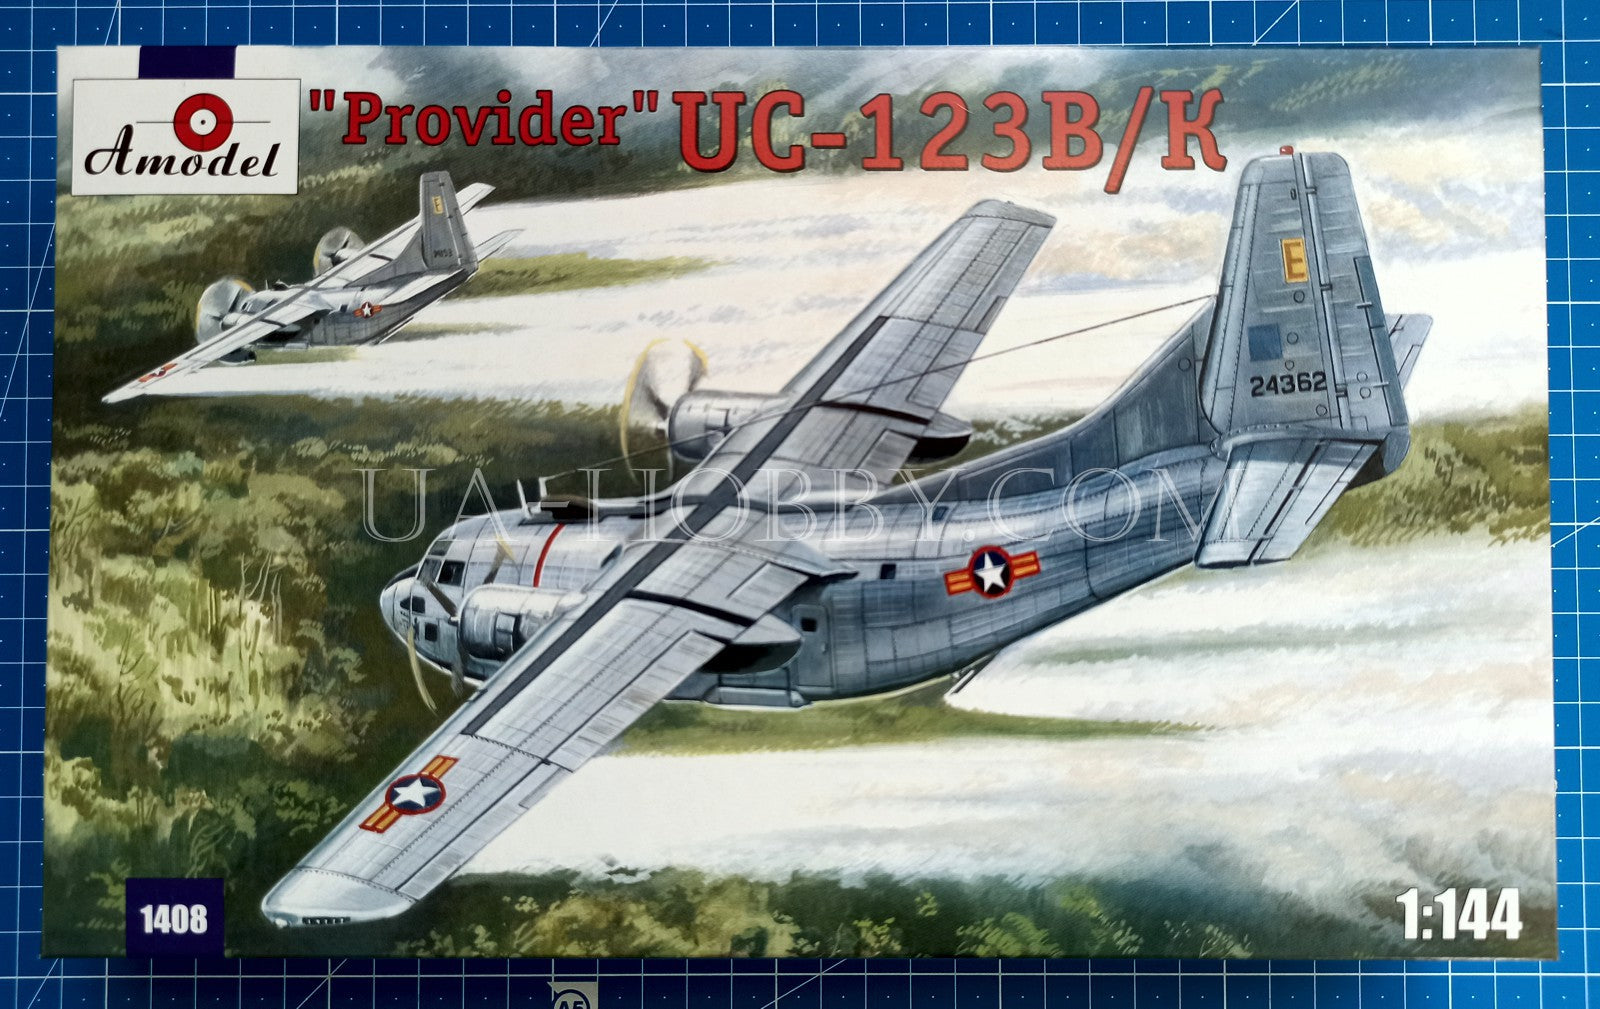 1/144 UC-123B/K Provider. Amodel 1408